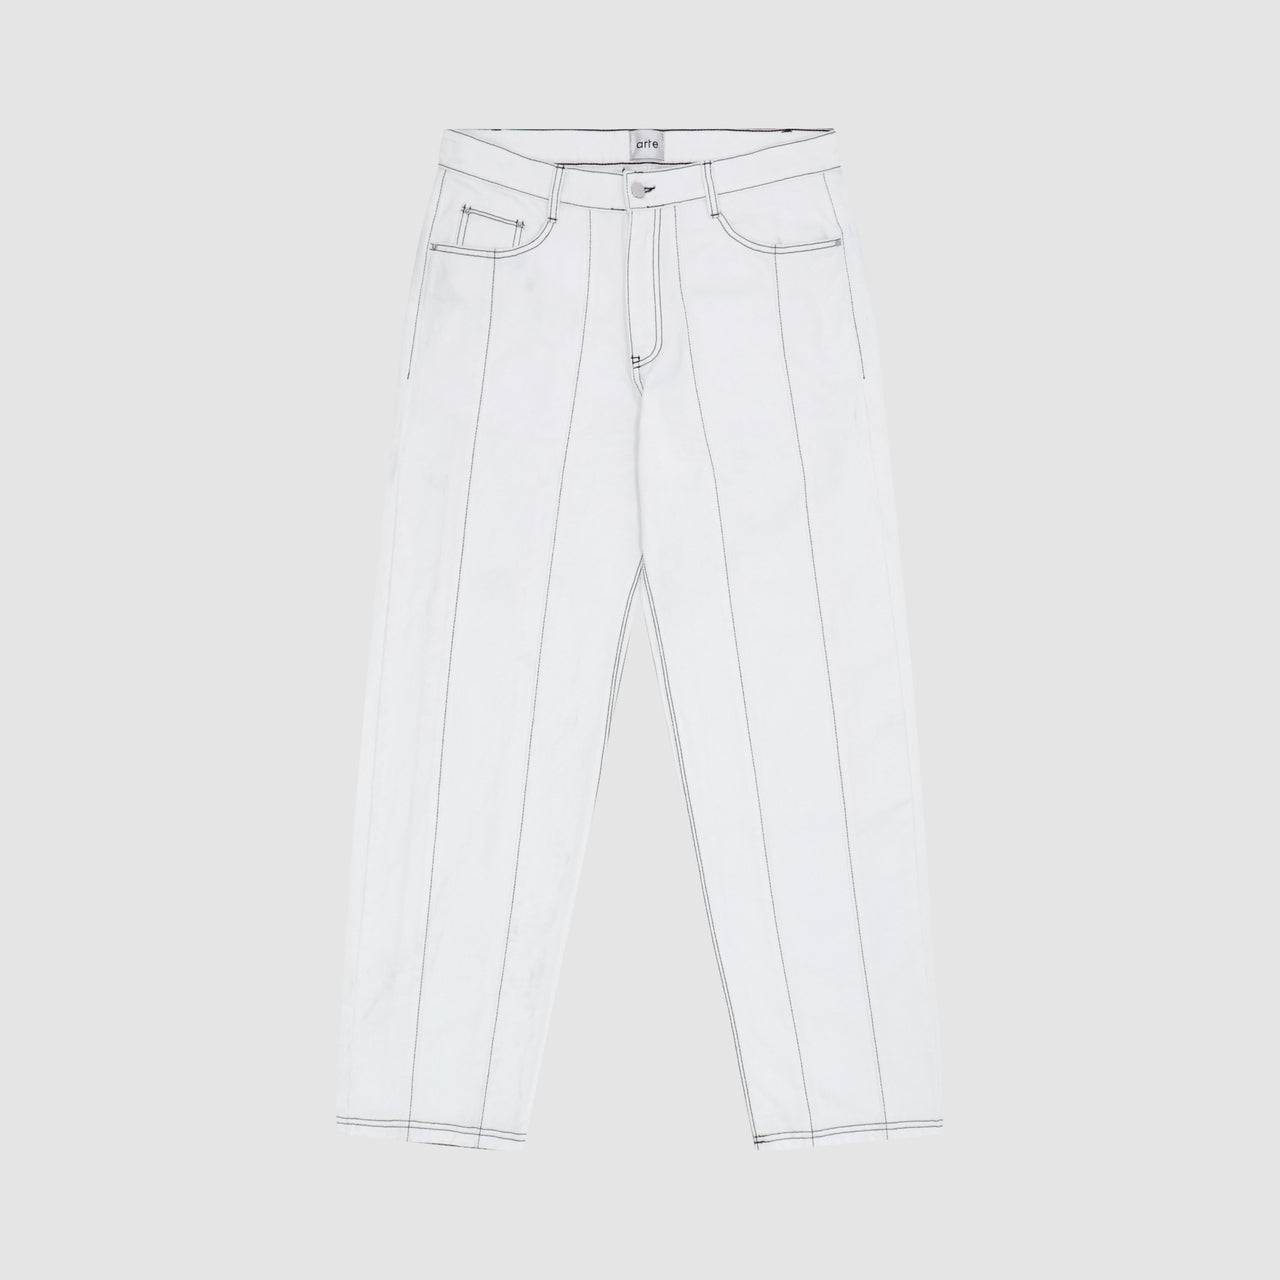 Pantalon Poage Detail - White